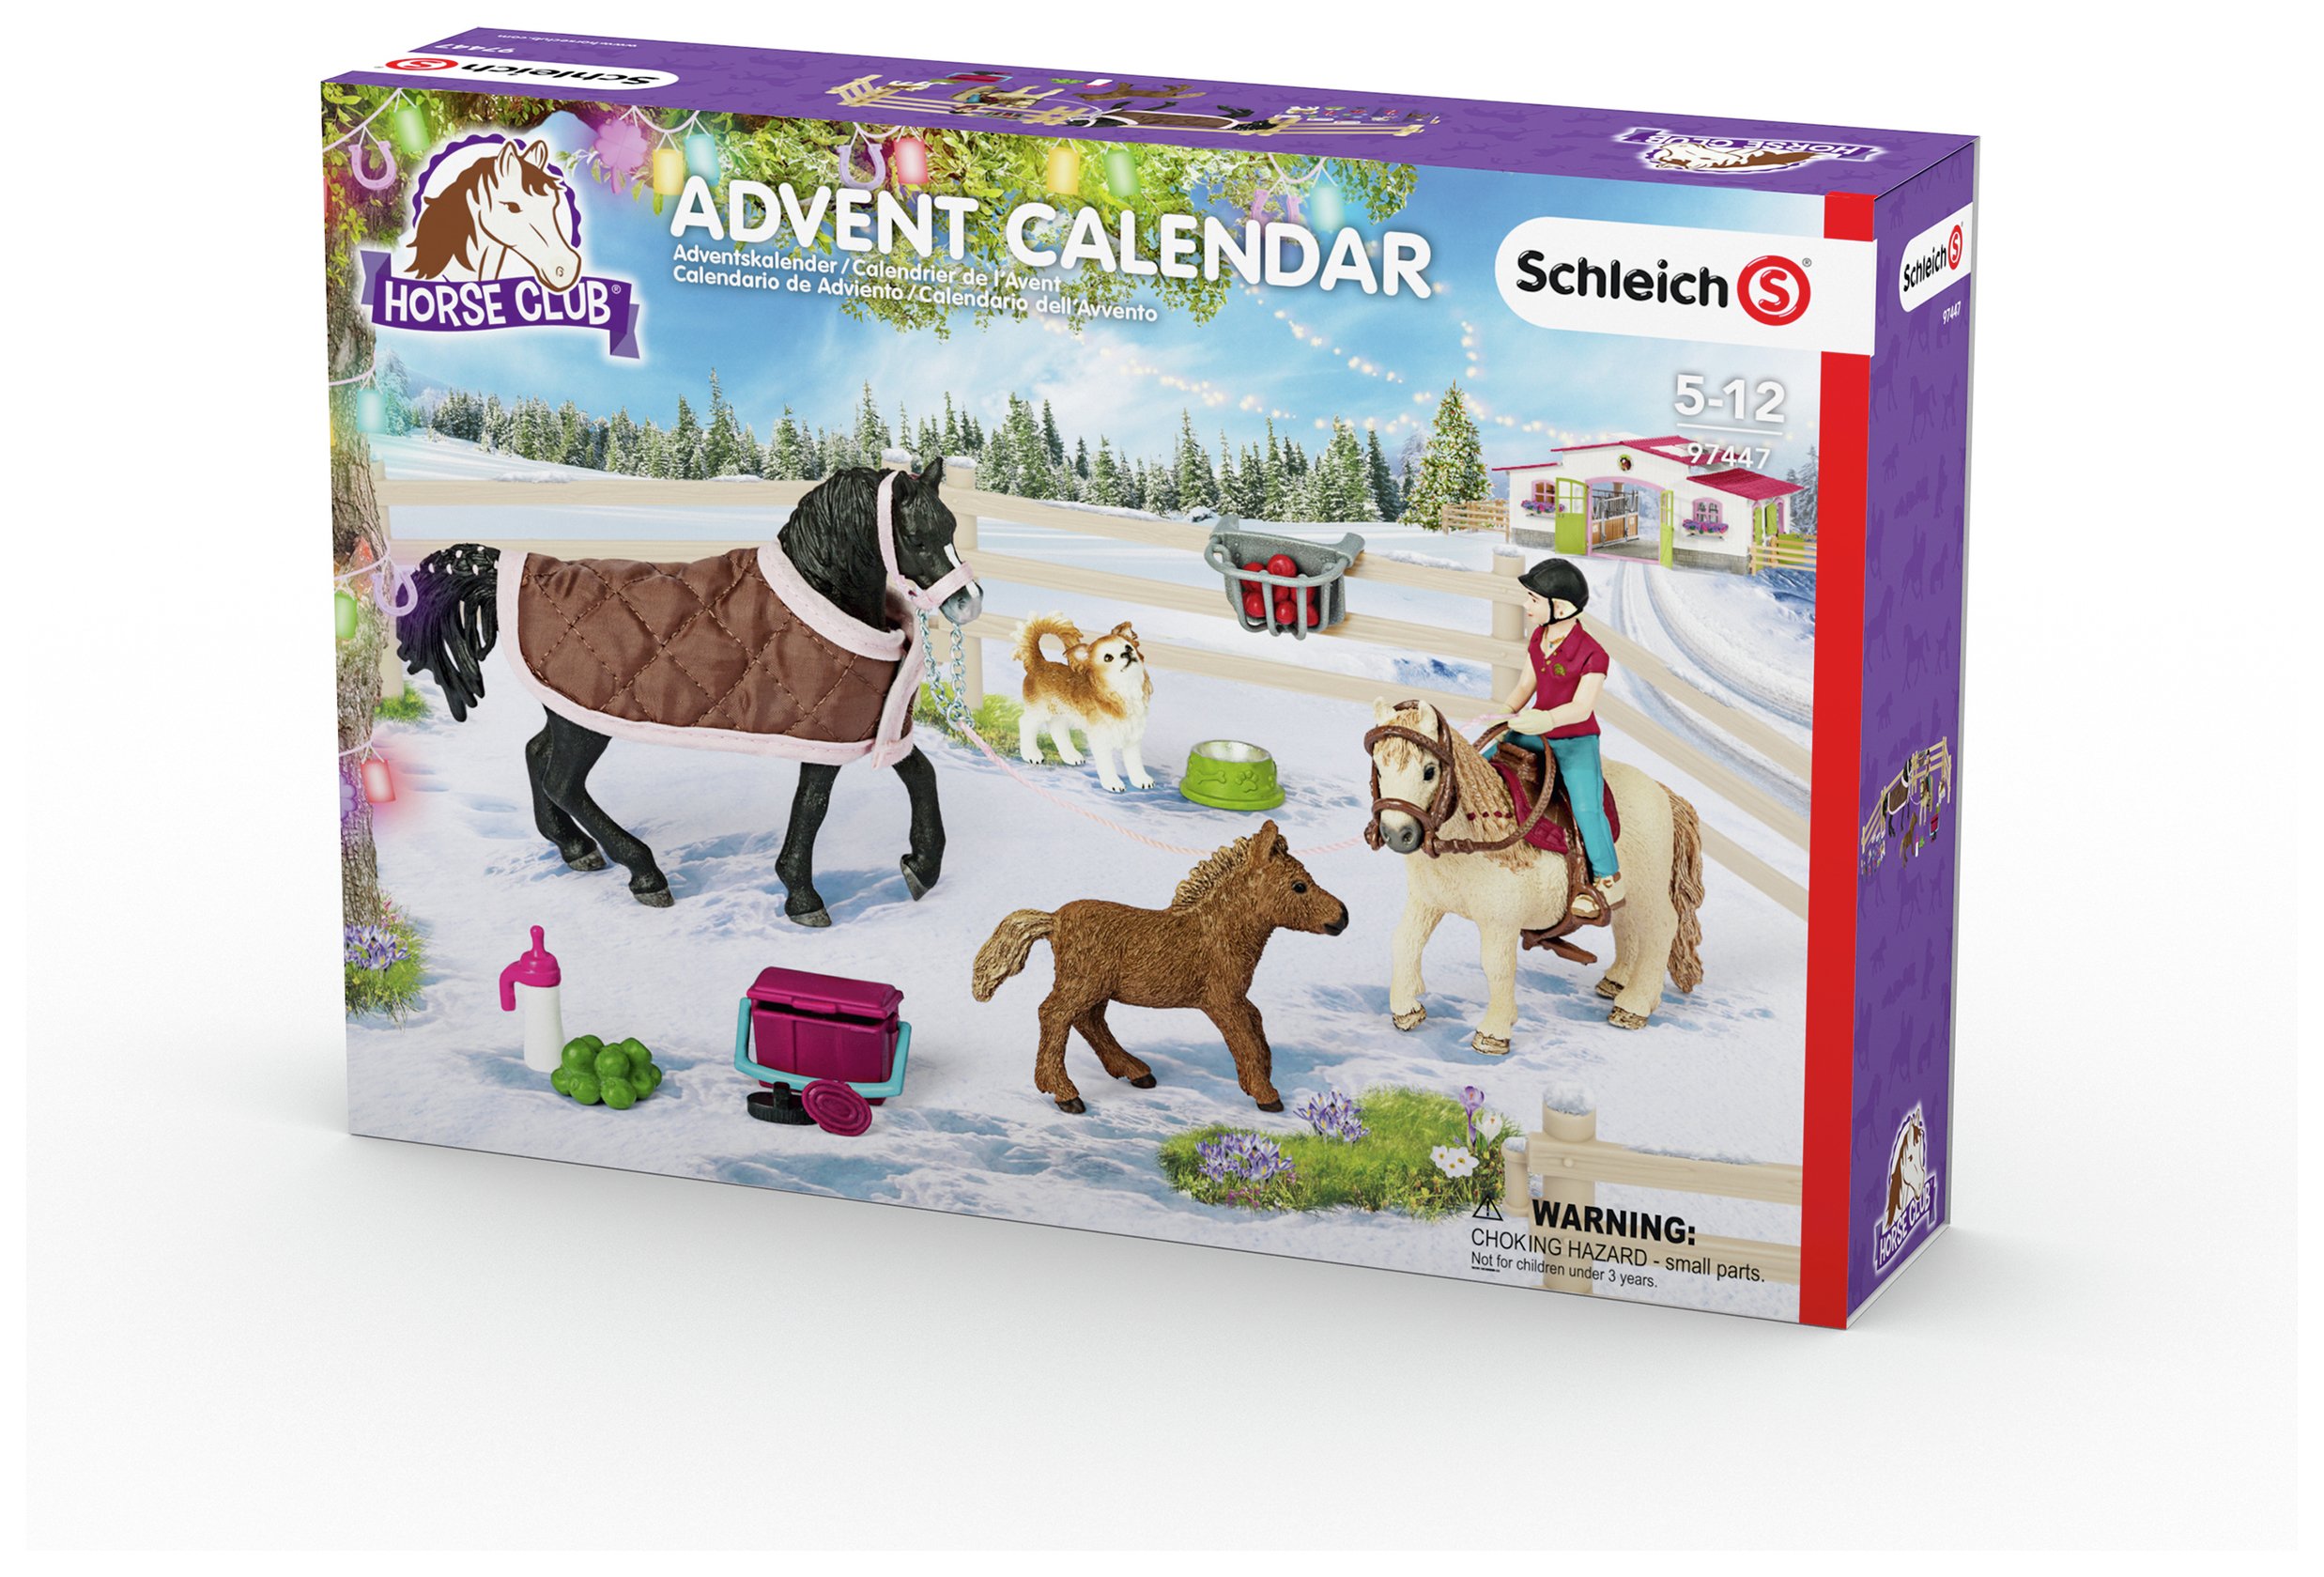 Schleich Horse Club Advent Calendar. Reviews